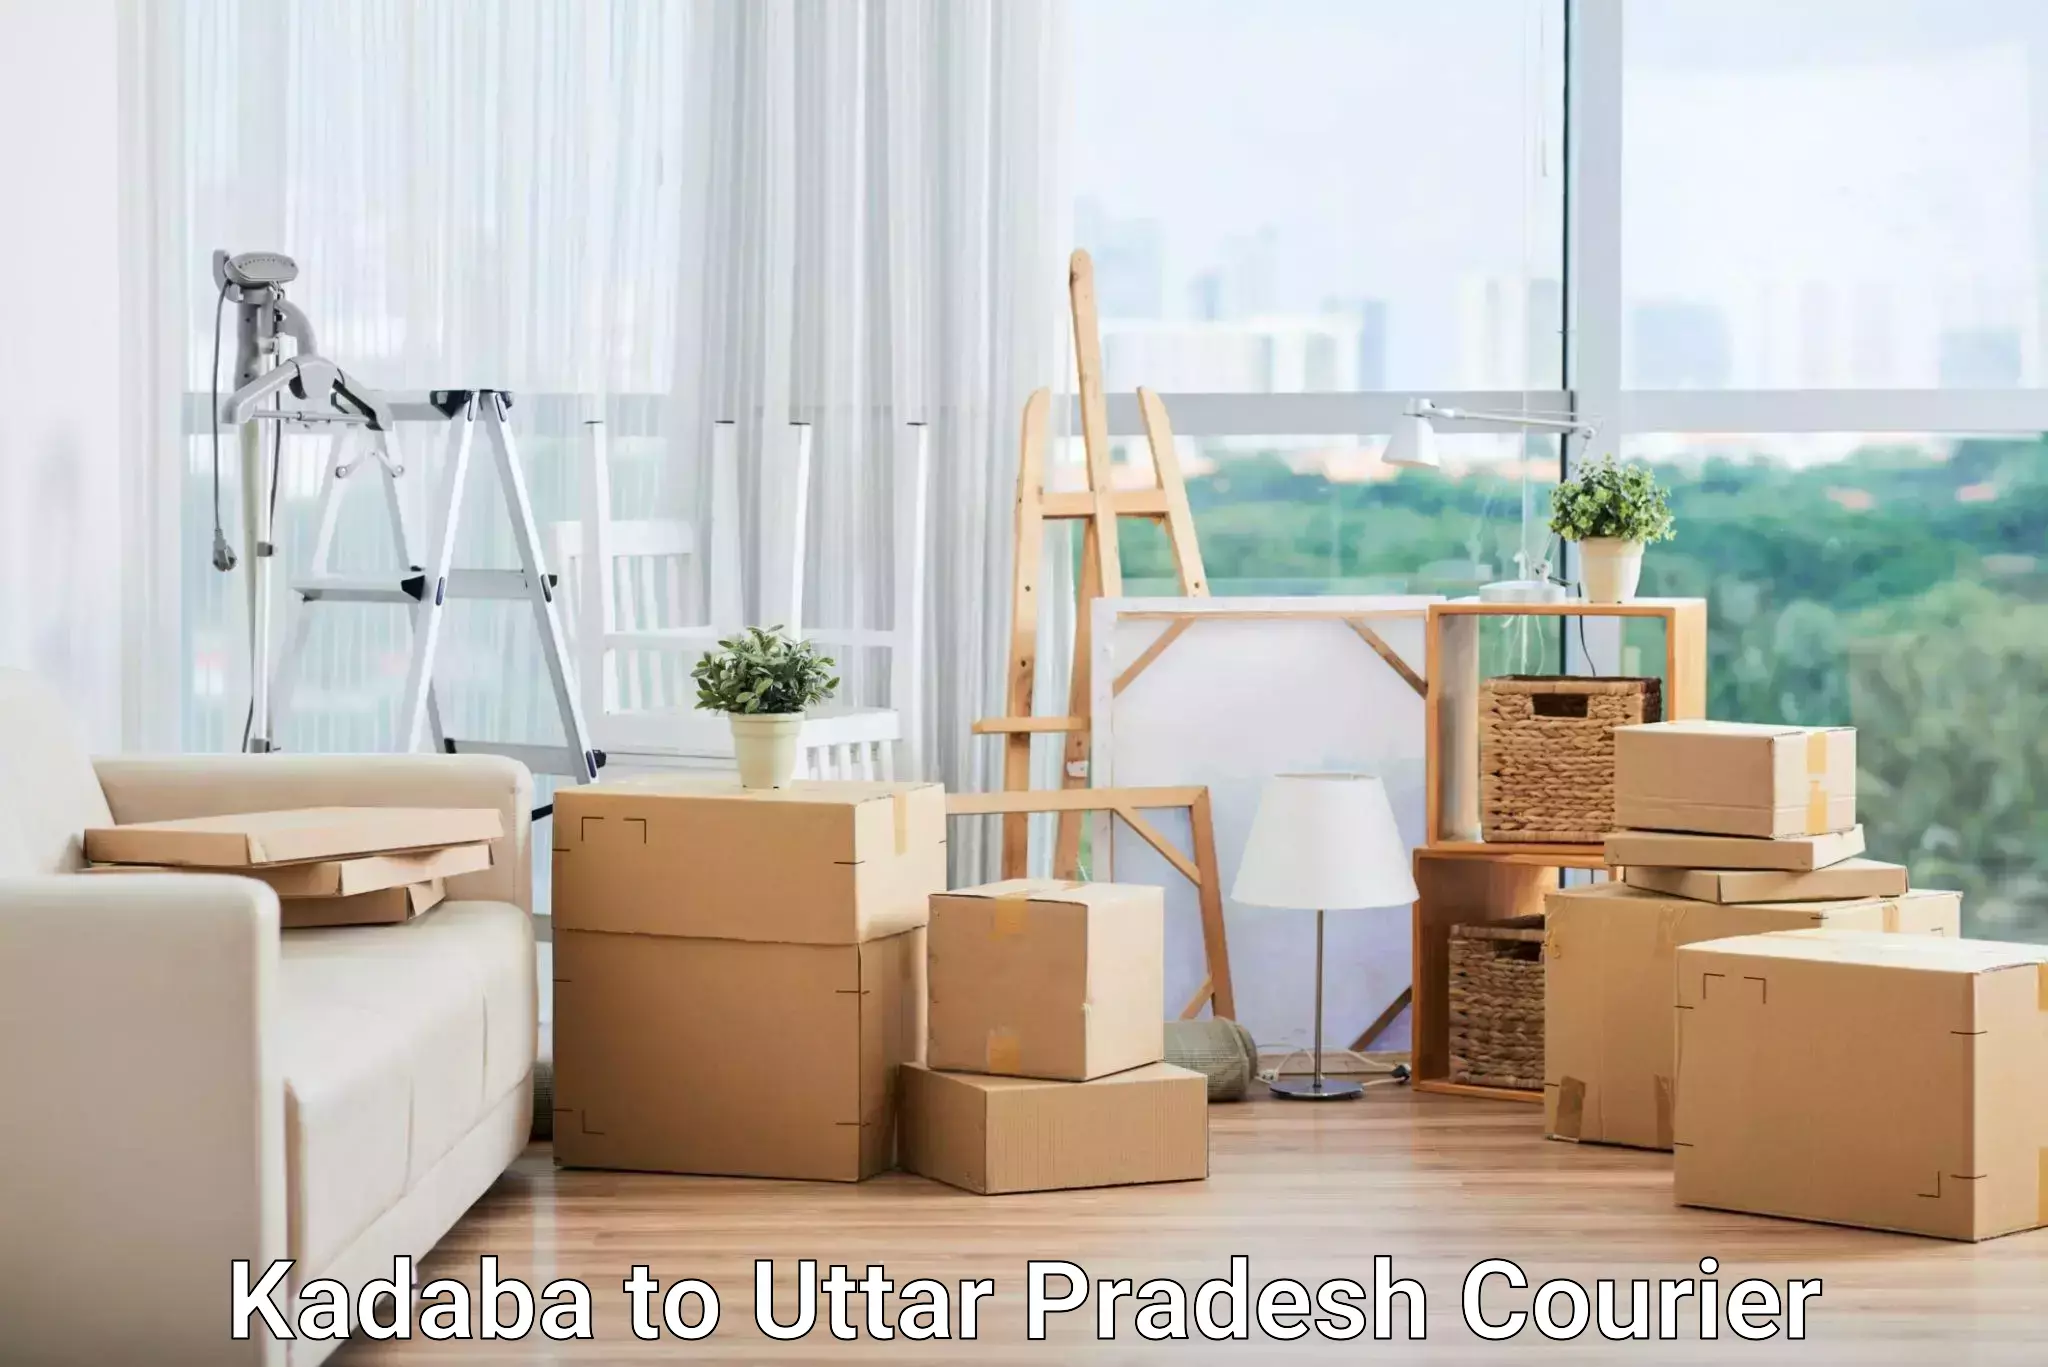 Reliable package handling Kadaba to Agra